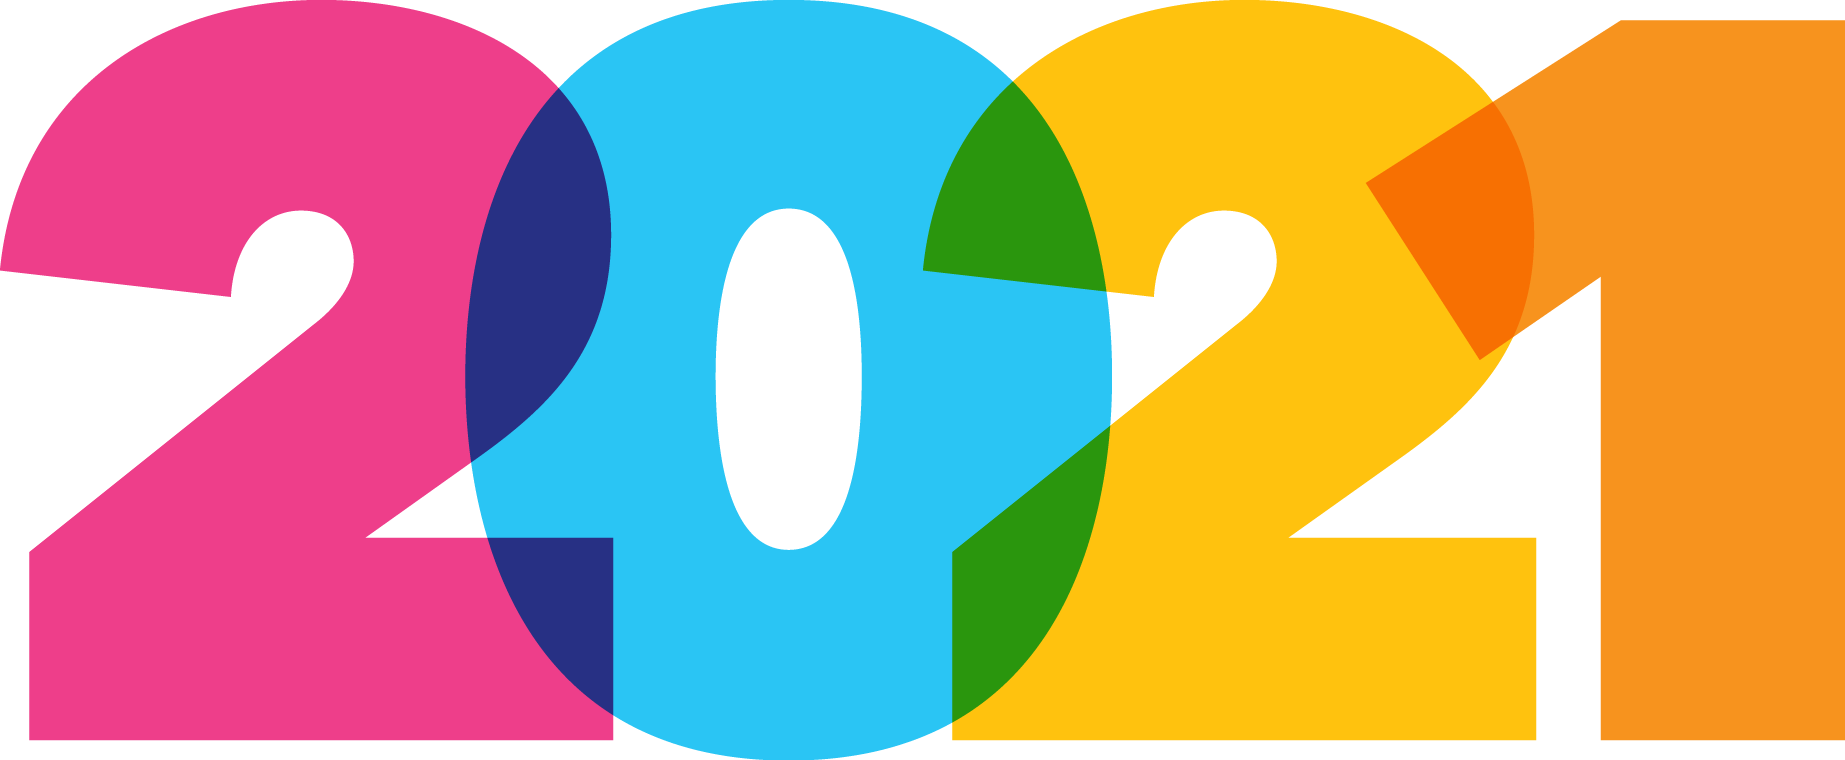 IFDC Logo